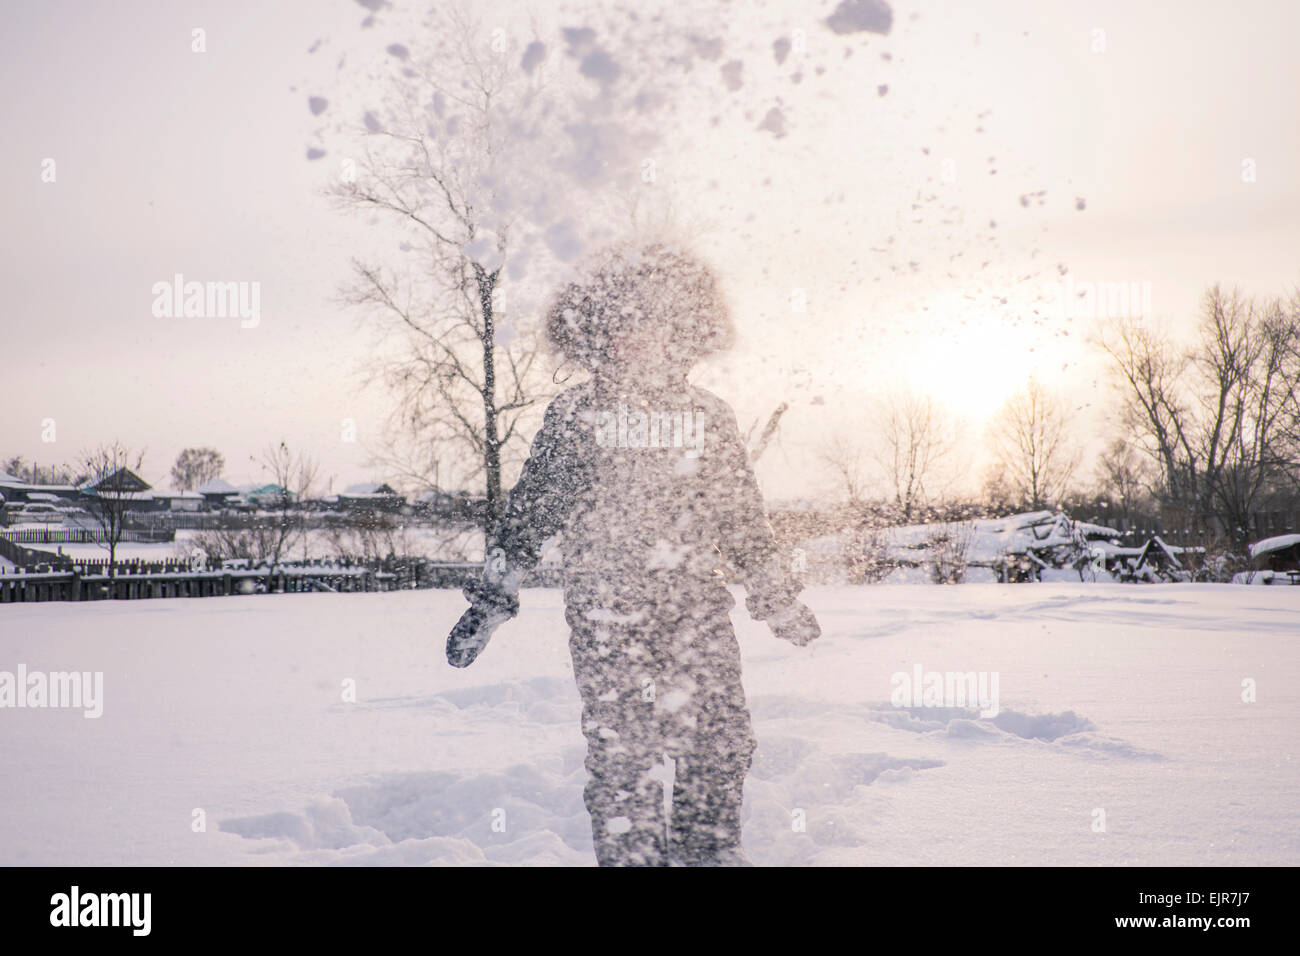 Mari boy in parka playing in snowy field Stock Photo